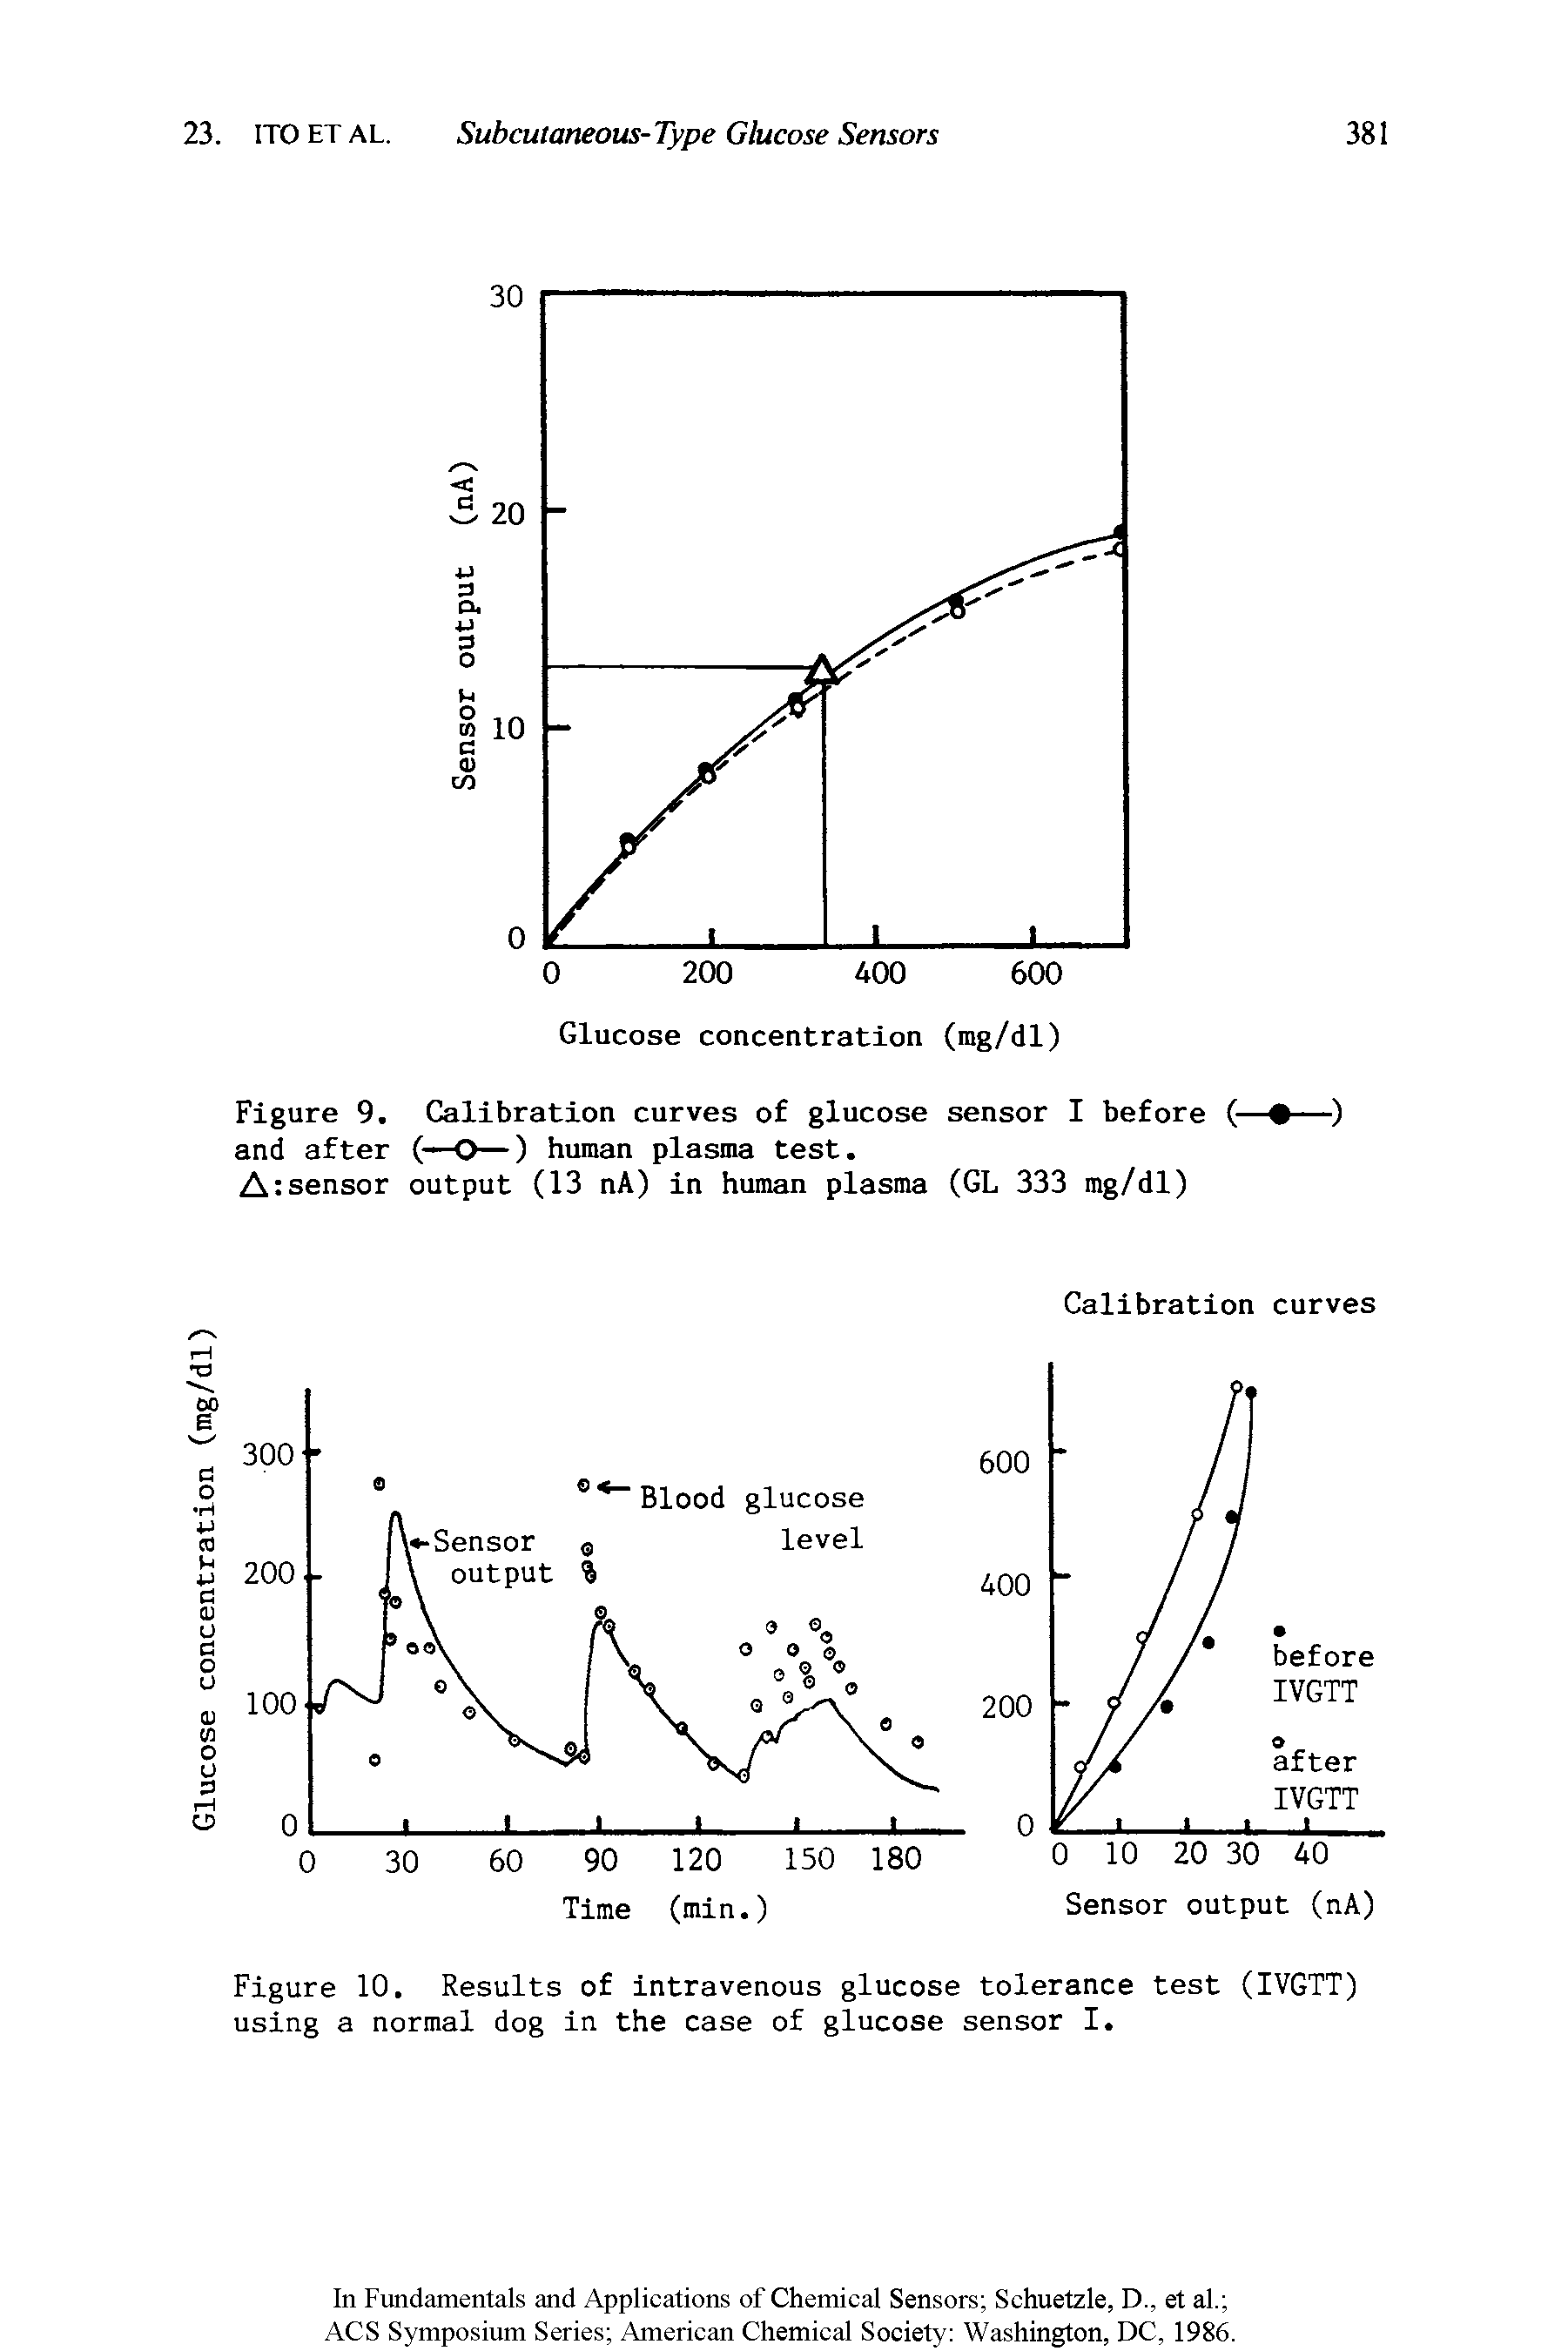 Figure 9. Calibration curves of glucose sensor I before (— —) and after (—O—) human plasma test.